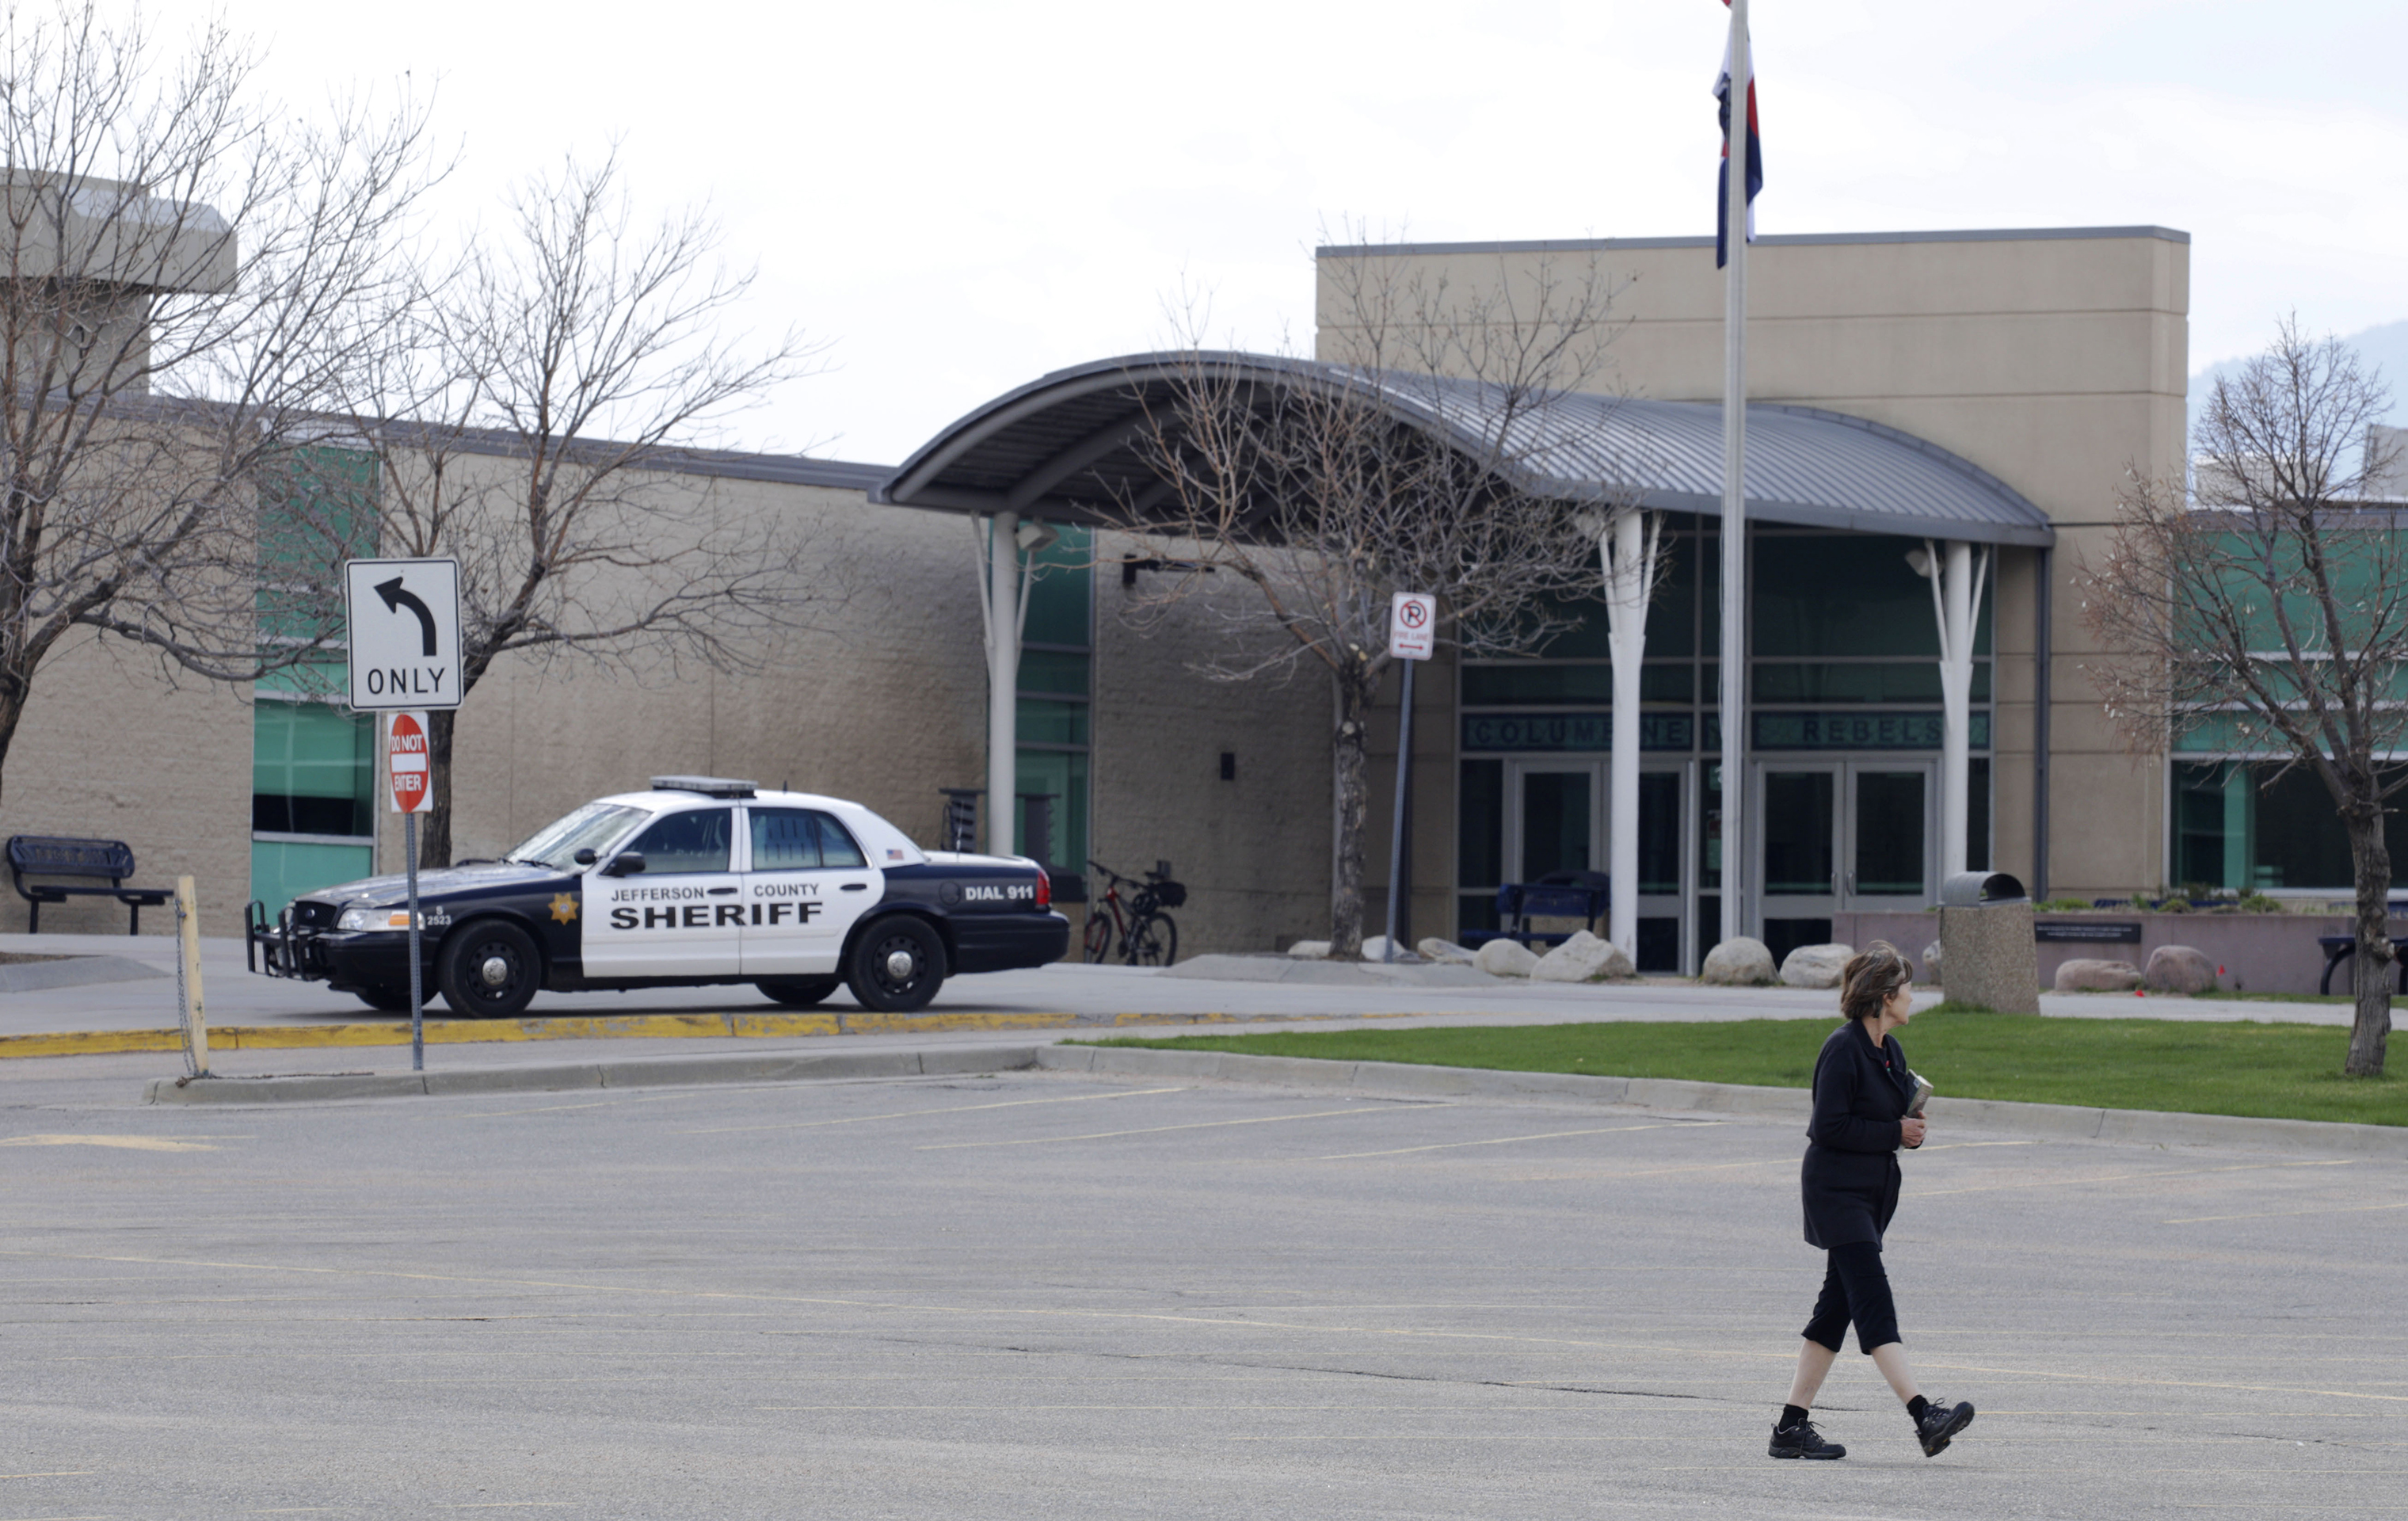 A woman walks across an empty parking lot a Columbine High School, Wednesday, April 17, 2019, in Littleton, Colorado, where two student killed 12 classmates and a teacher in 1999. (Joe Mahoney—AP)